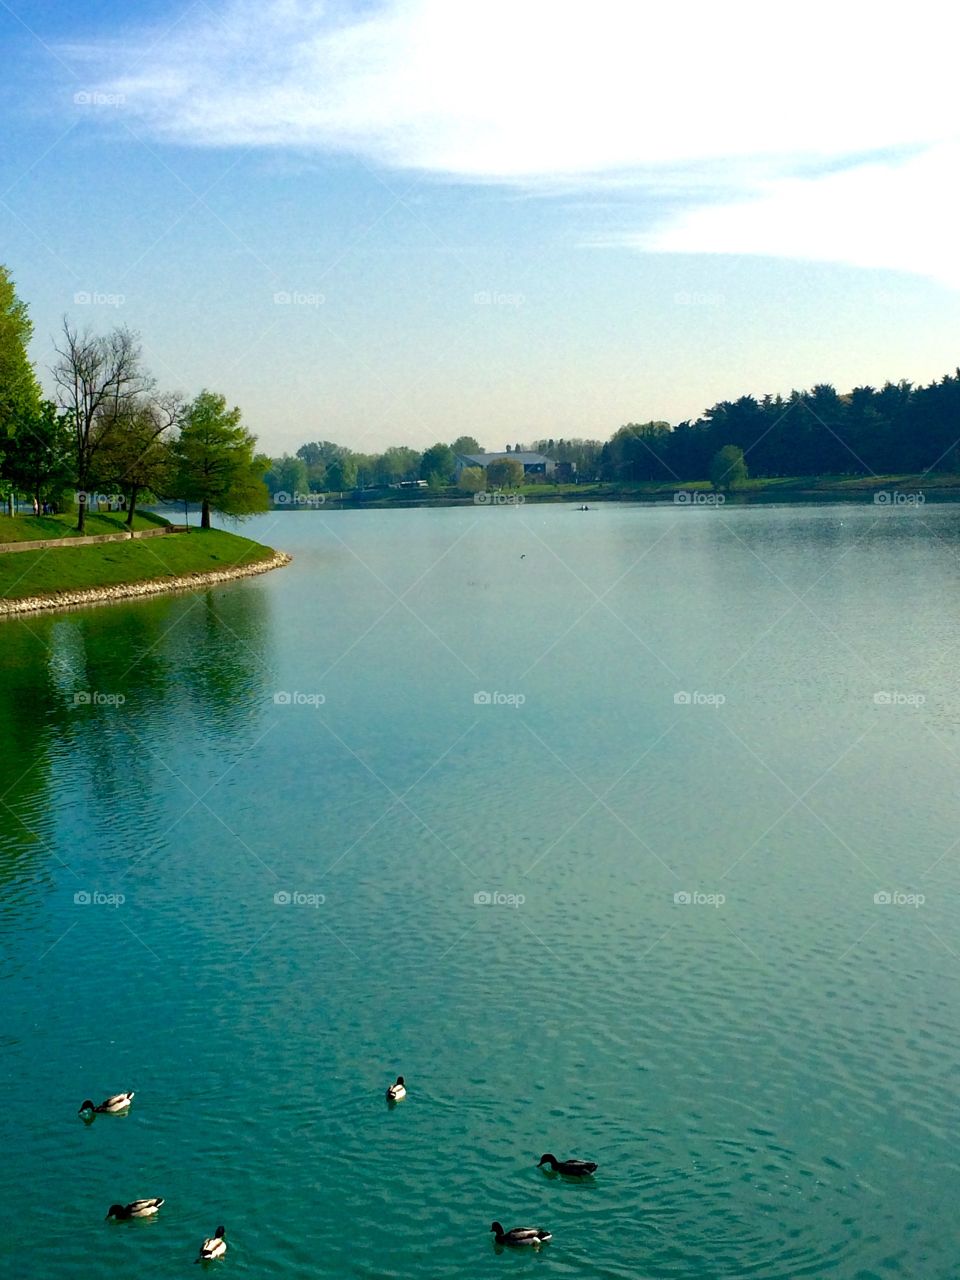 Idroscalo lake, Milan 